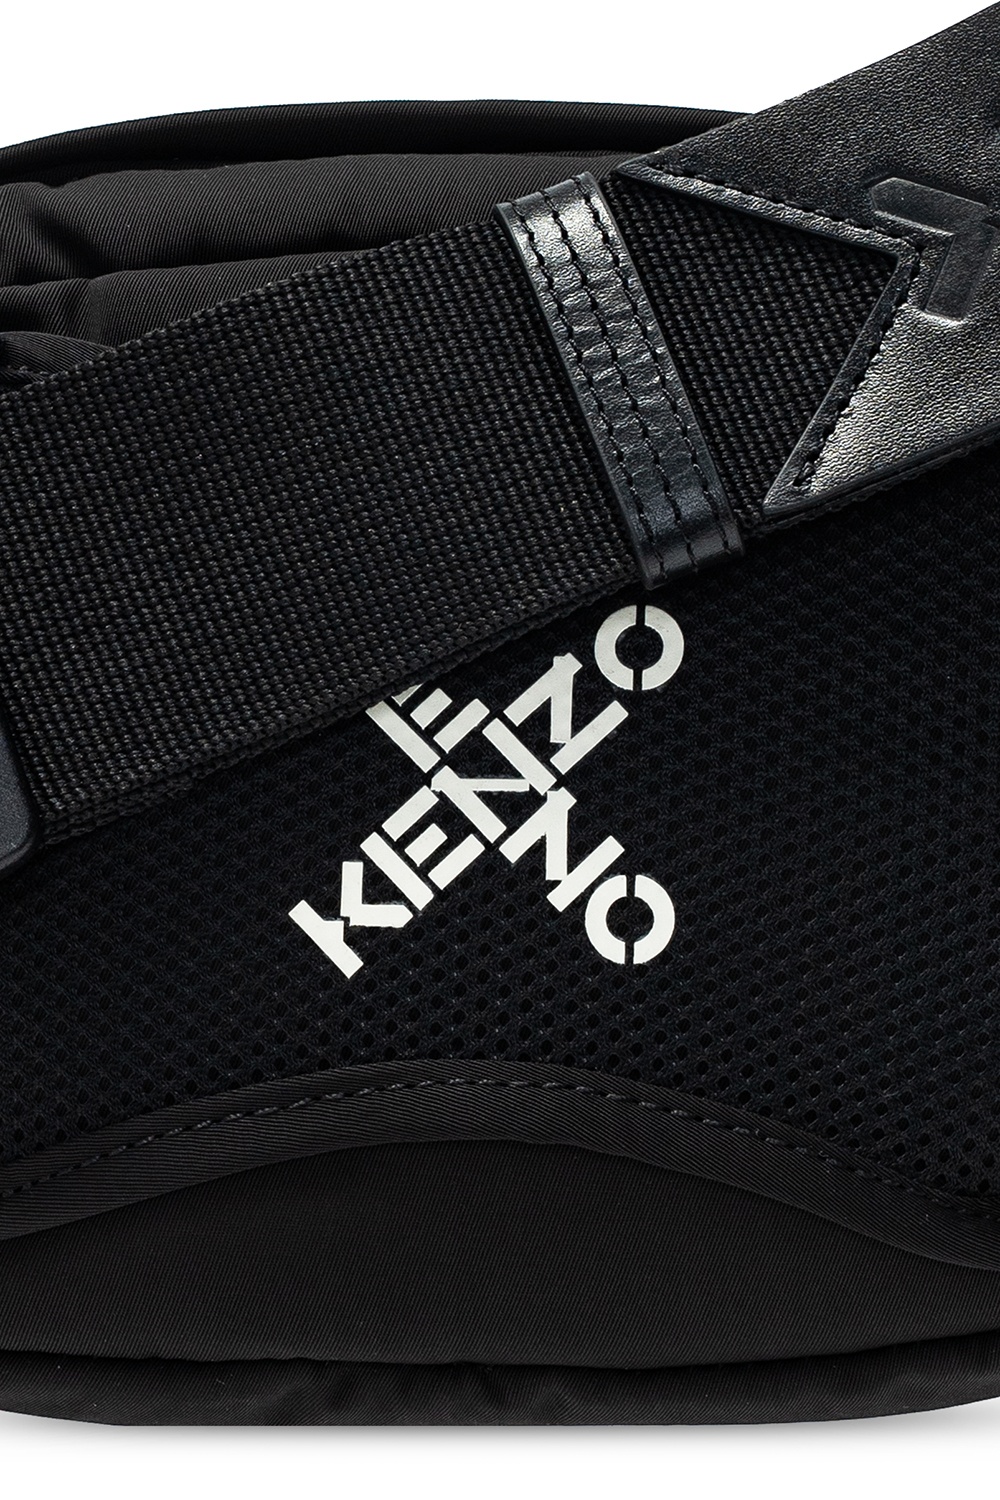 Kenzo stitch-logo shoulder bag